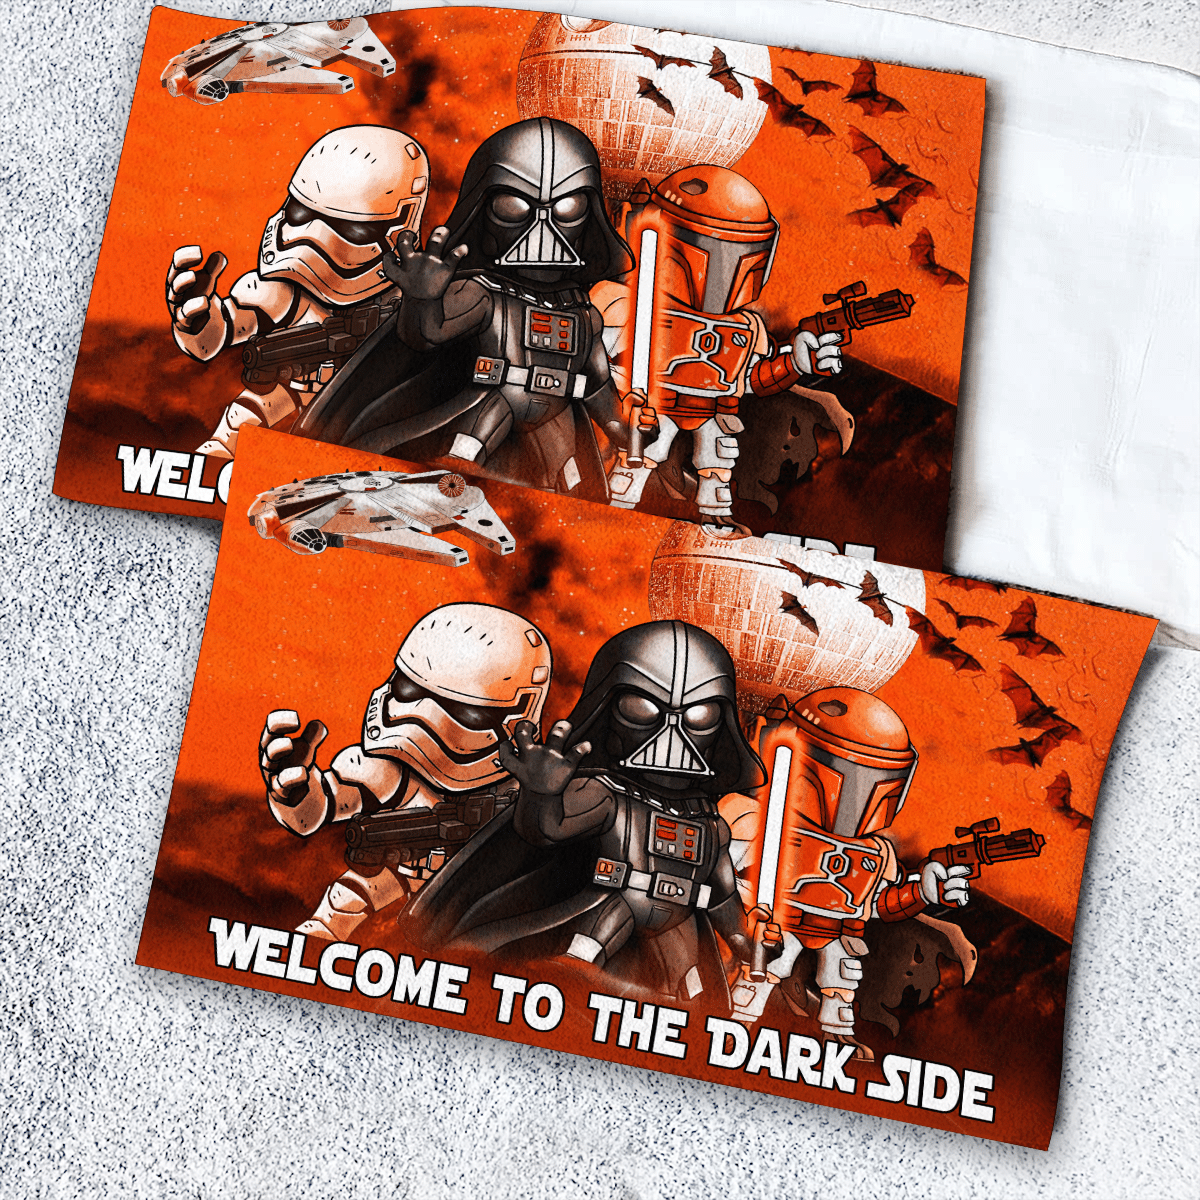 Star Wars Darth Vader Stormtrooper Boba Fett Welcome to the dark side doormart 4